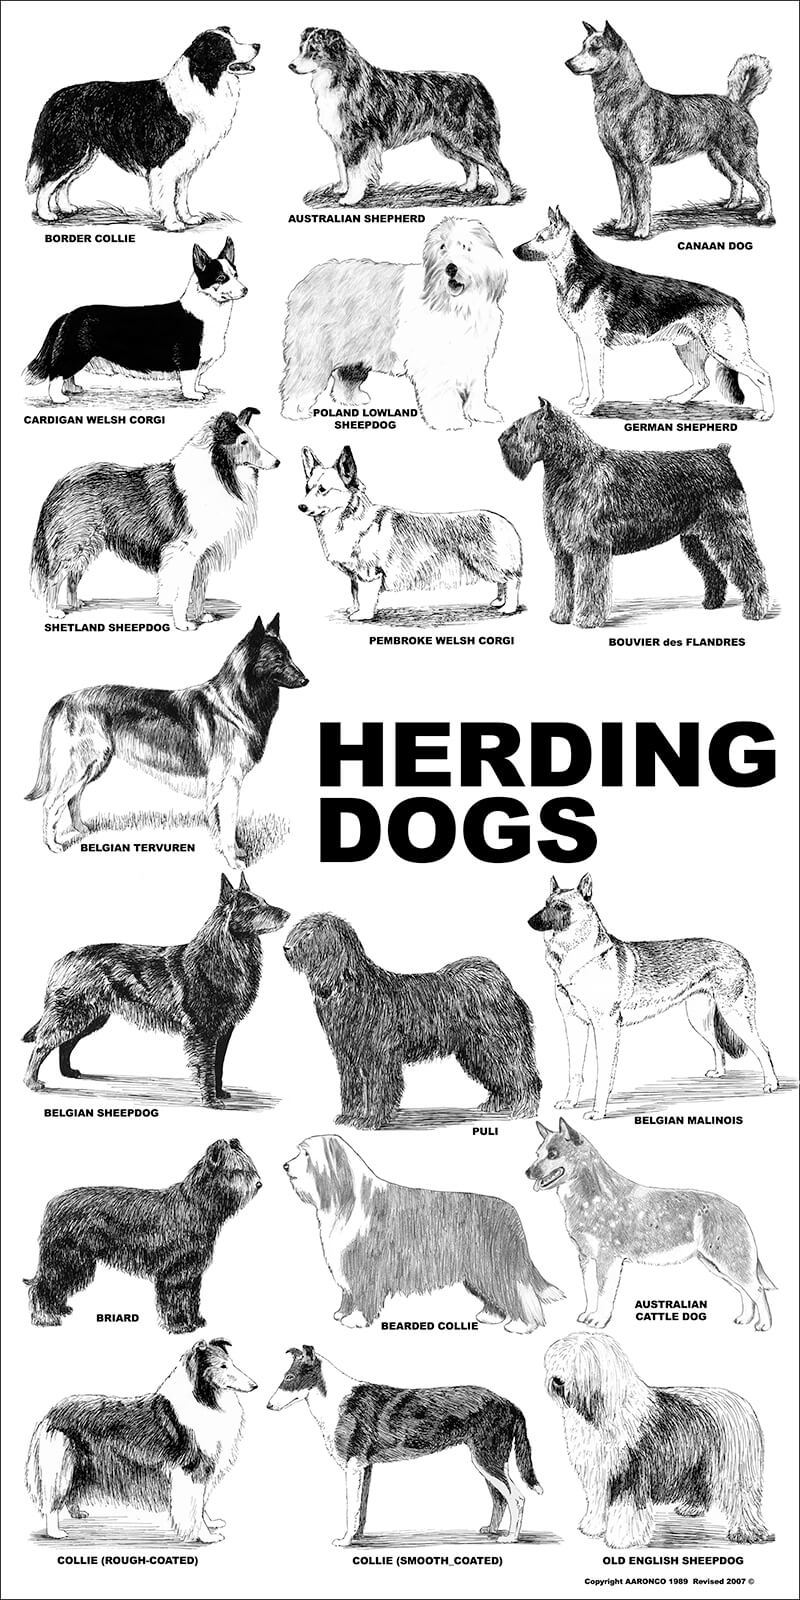 Herding dog, Breeds, Photographs, & Facts